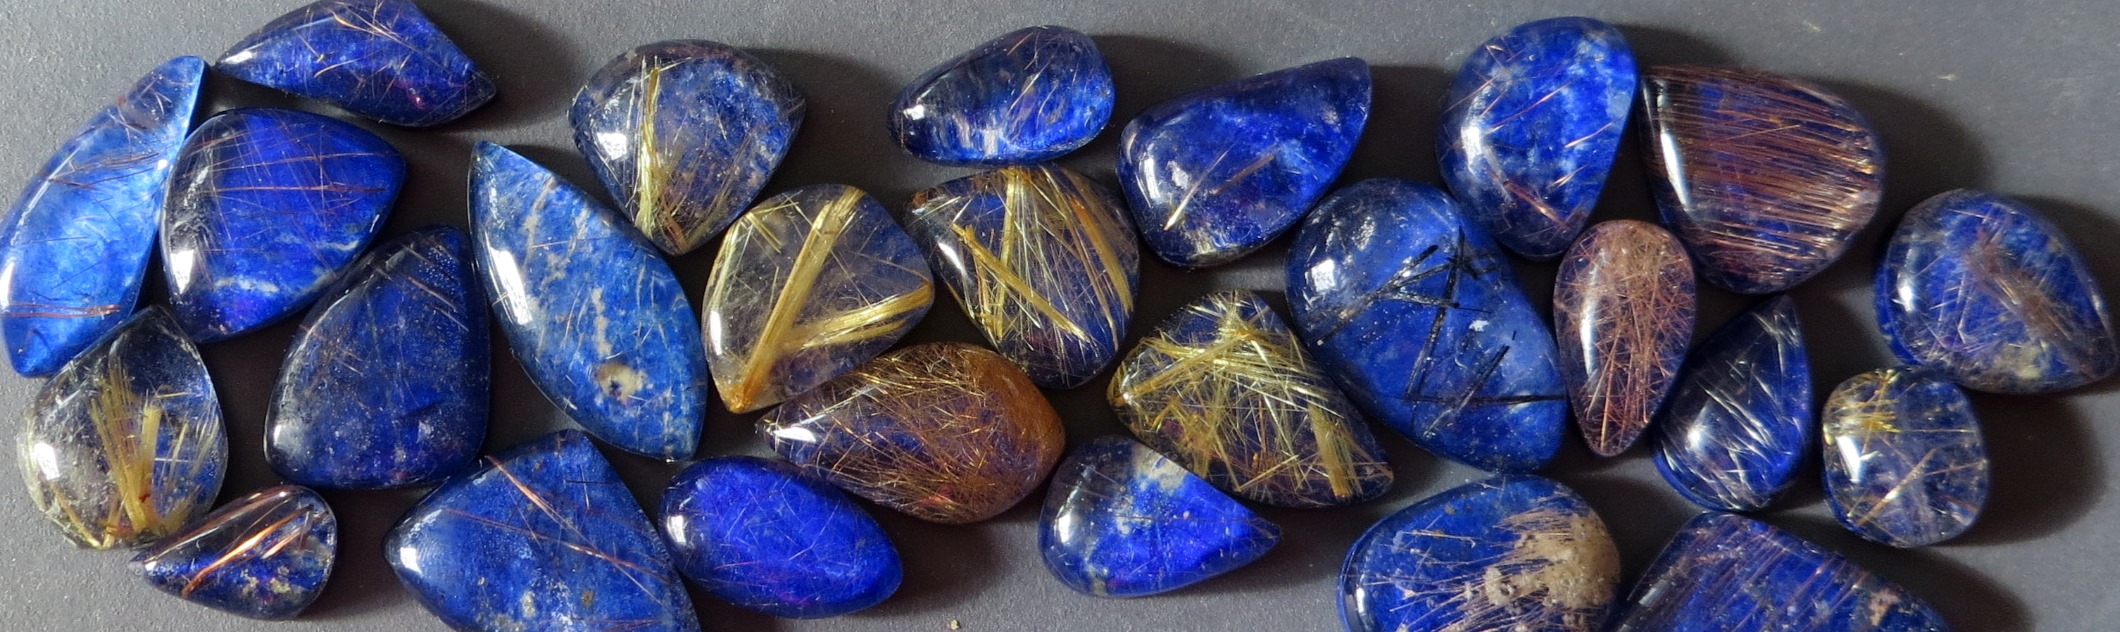 Doublet sagenite and lapis lazuli